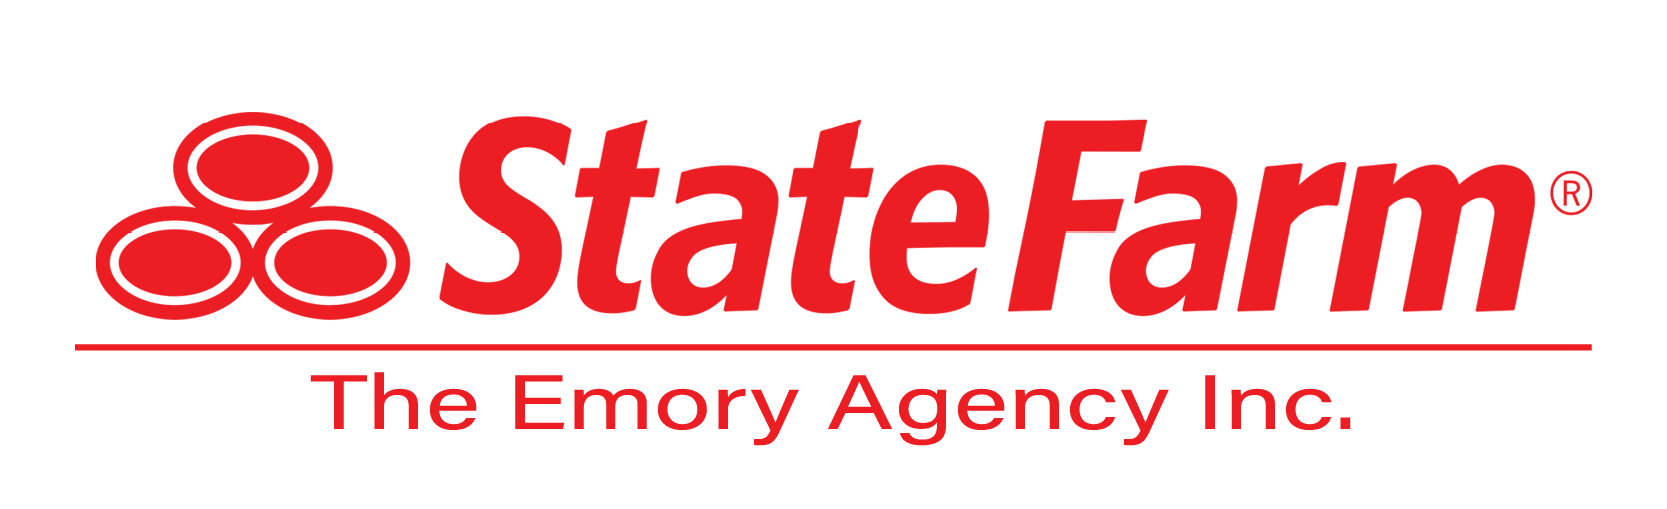 StateFarm - The Emory Agency Inc